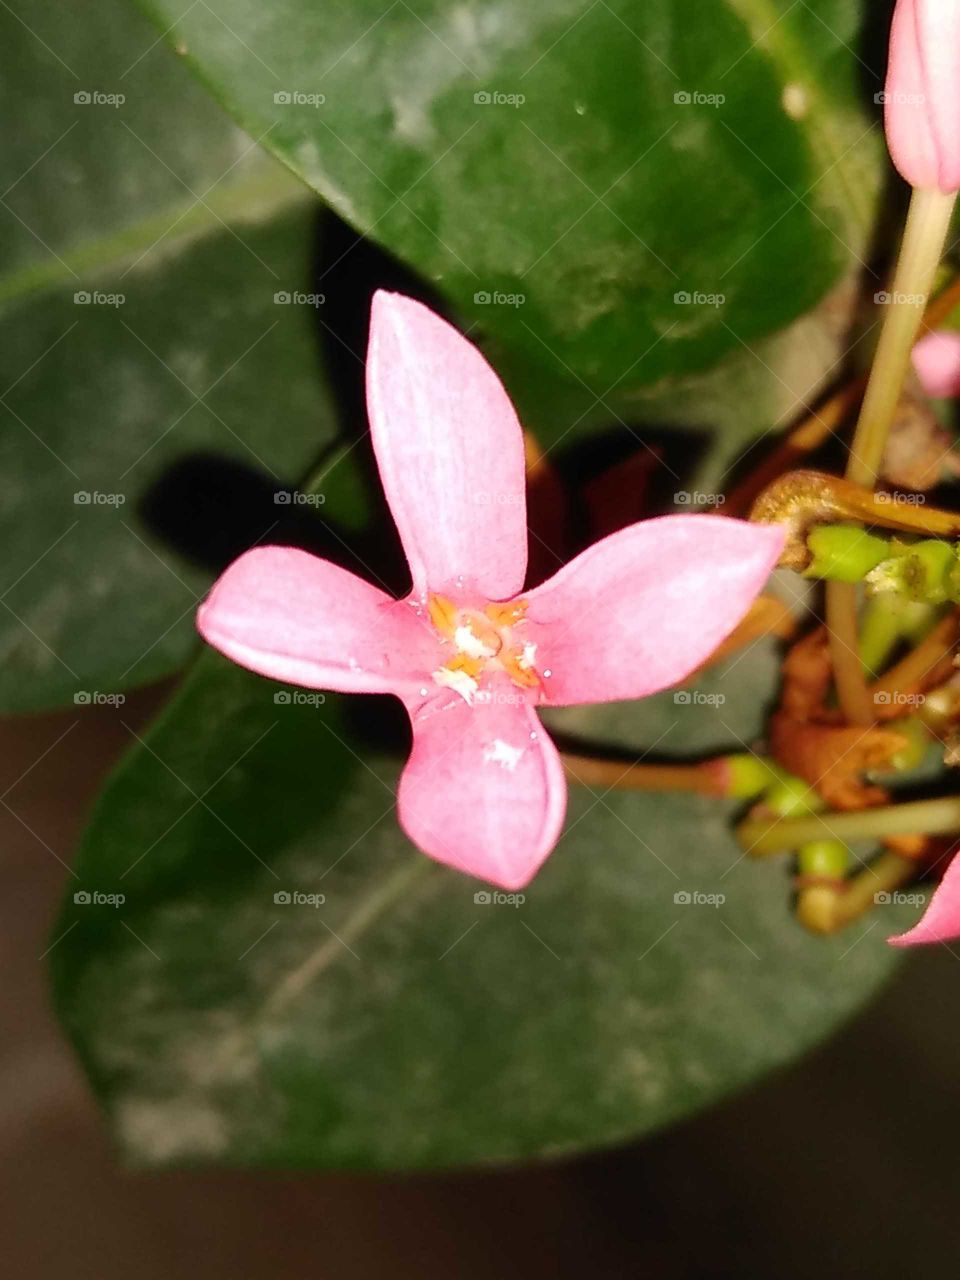 a small beautiful pink flower